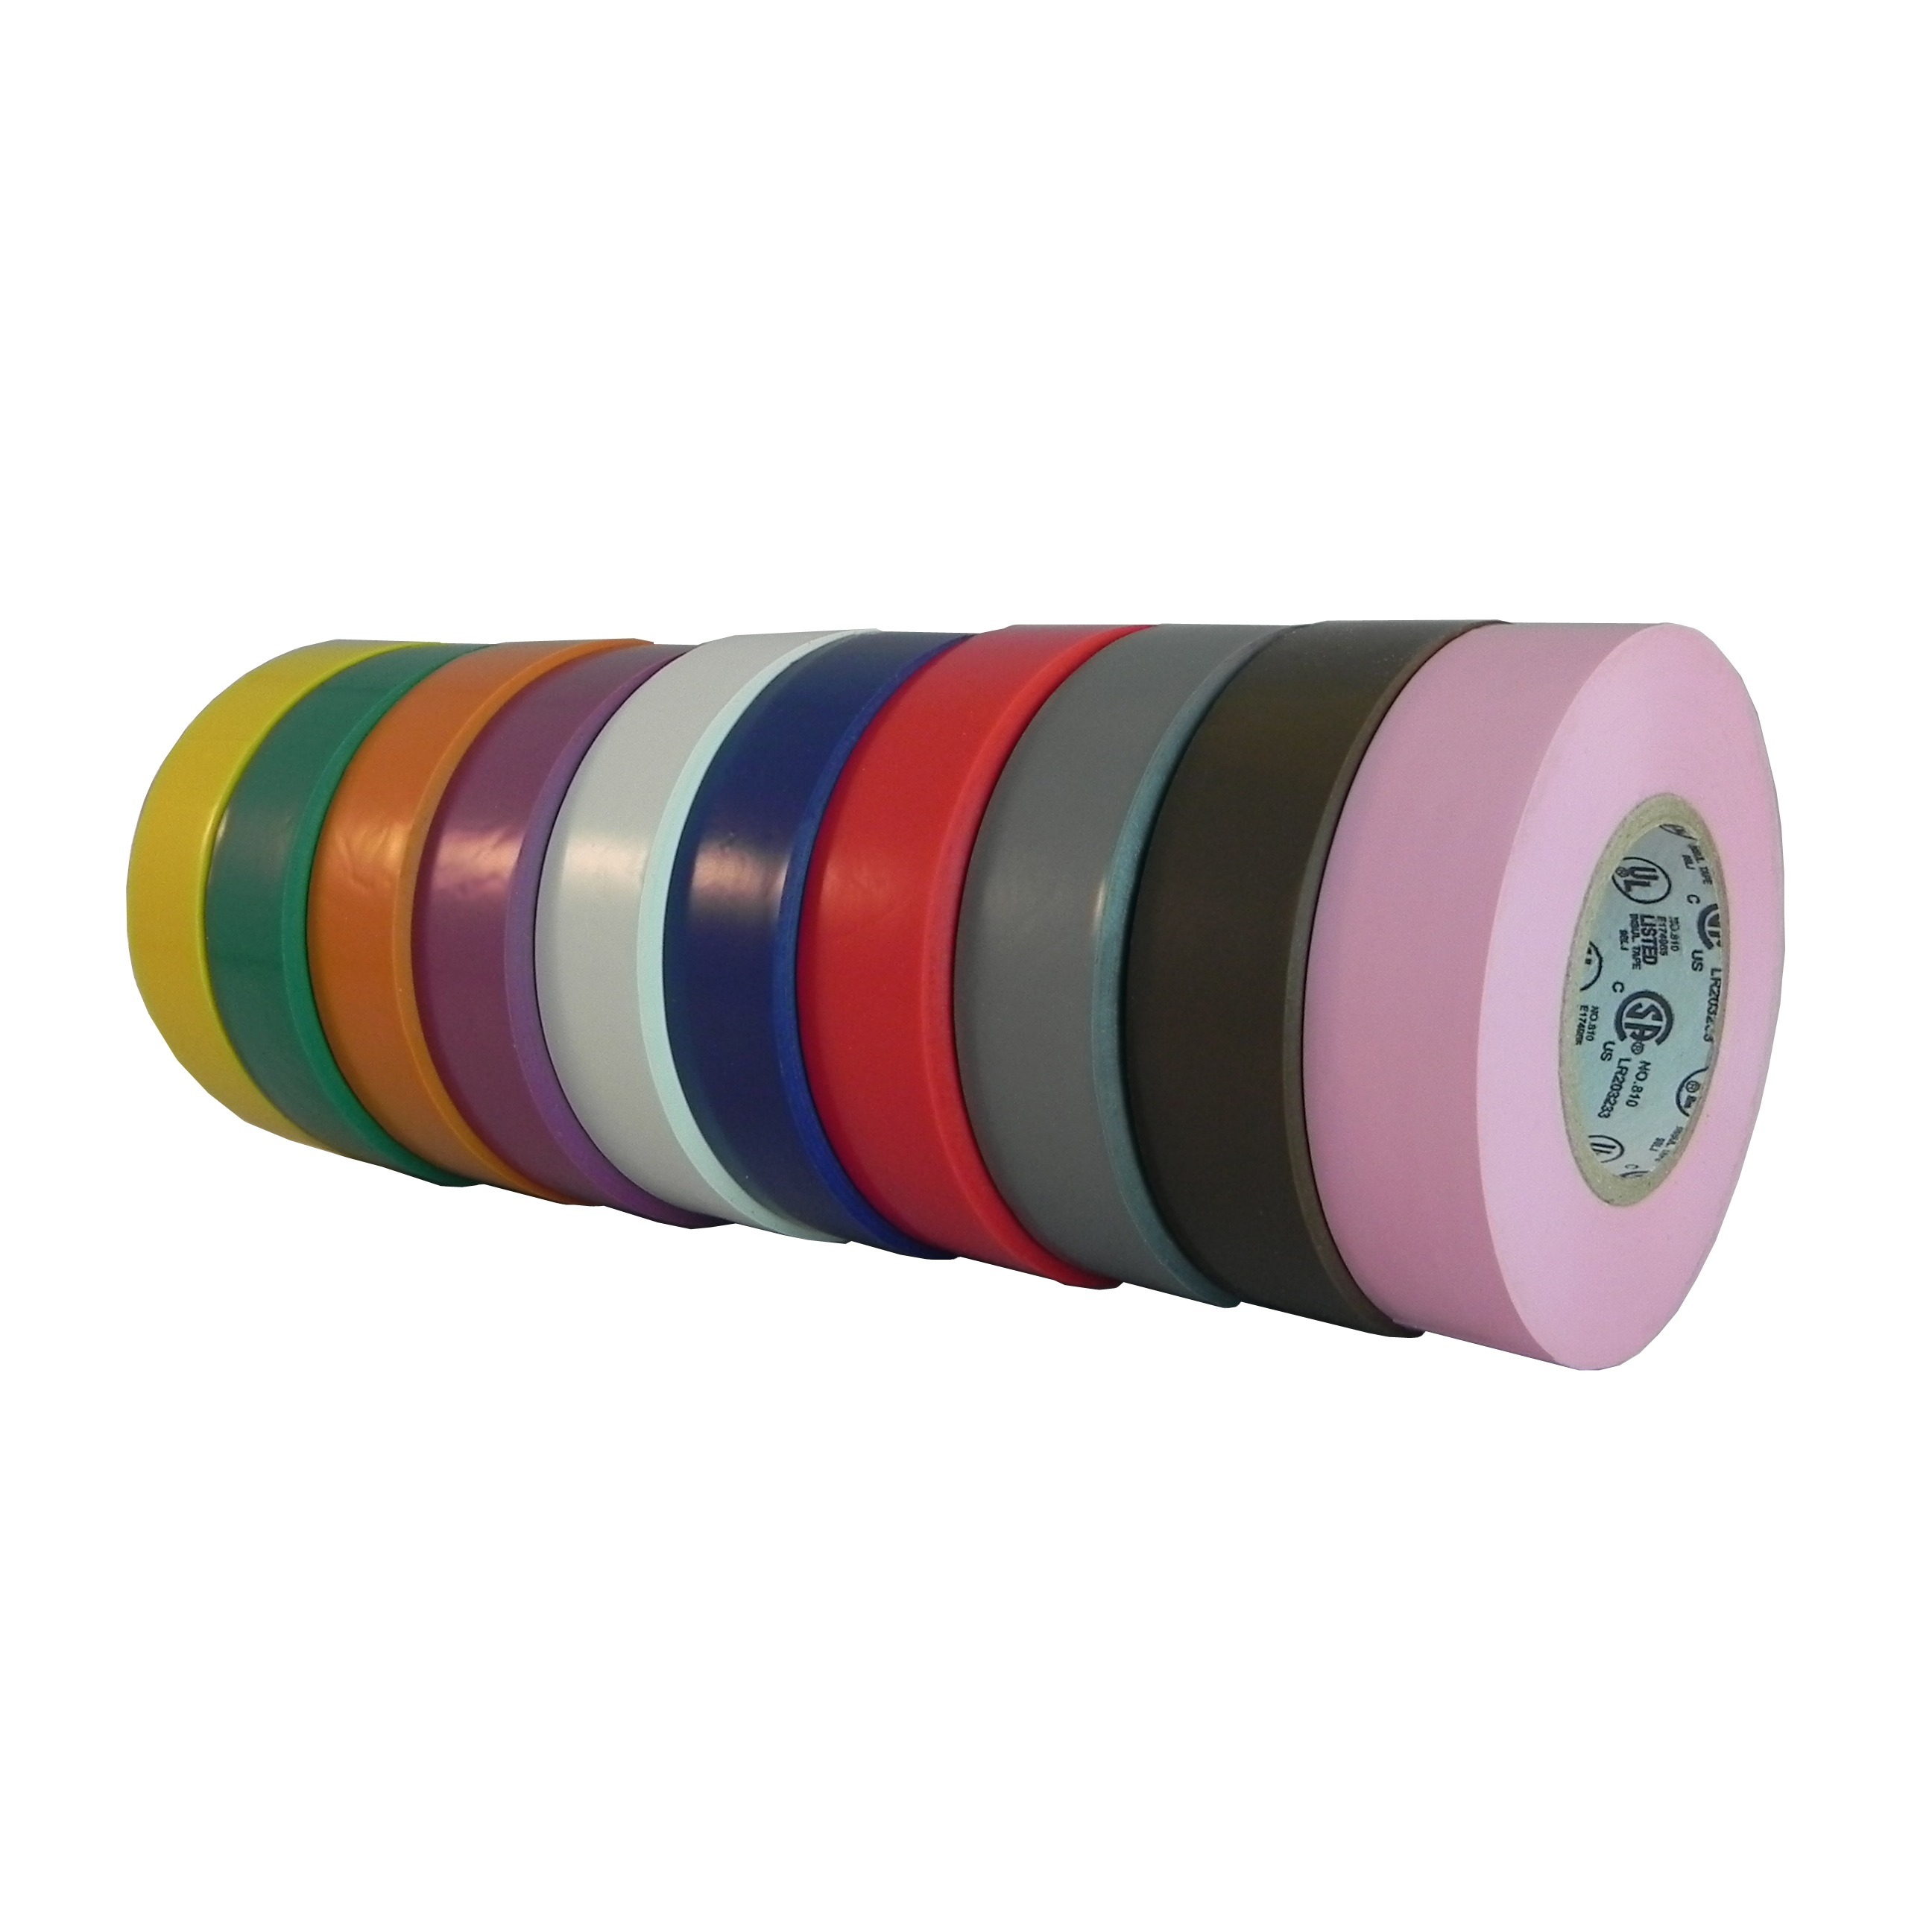 TradeGear Electrical Tape ASSORTED GLOSSY Rainbow Colors 10 Pk Waterproof ... 